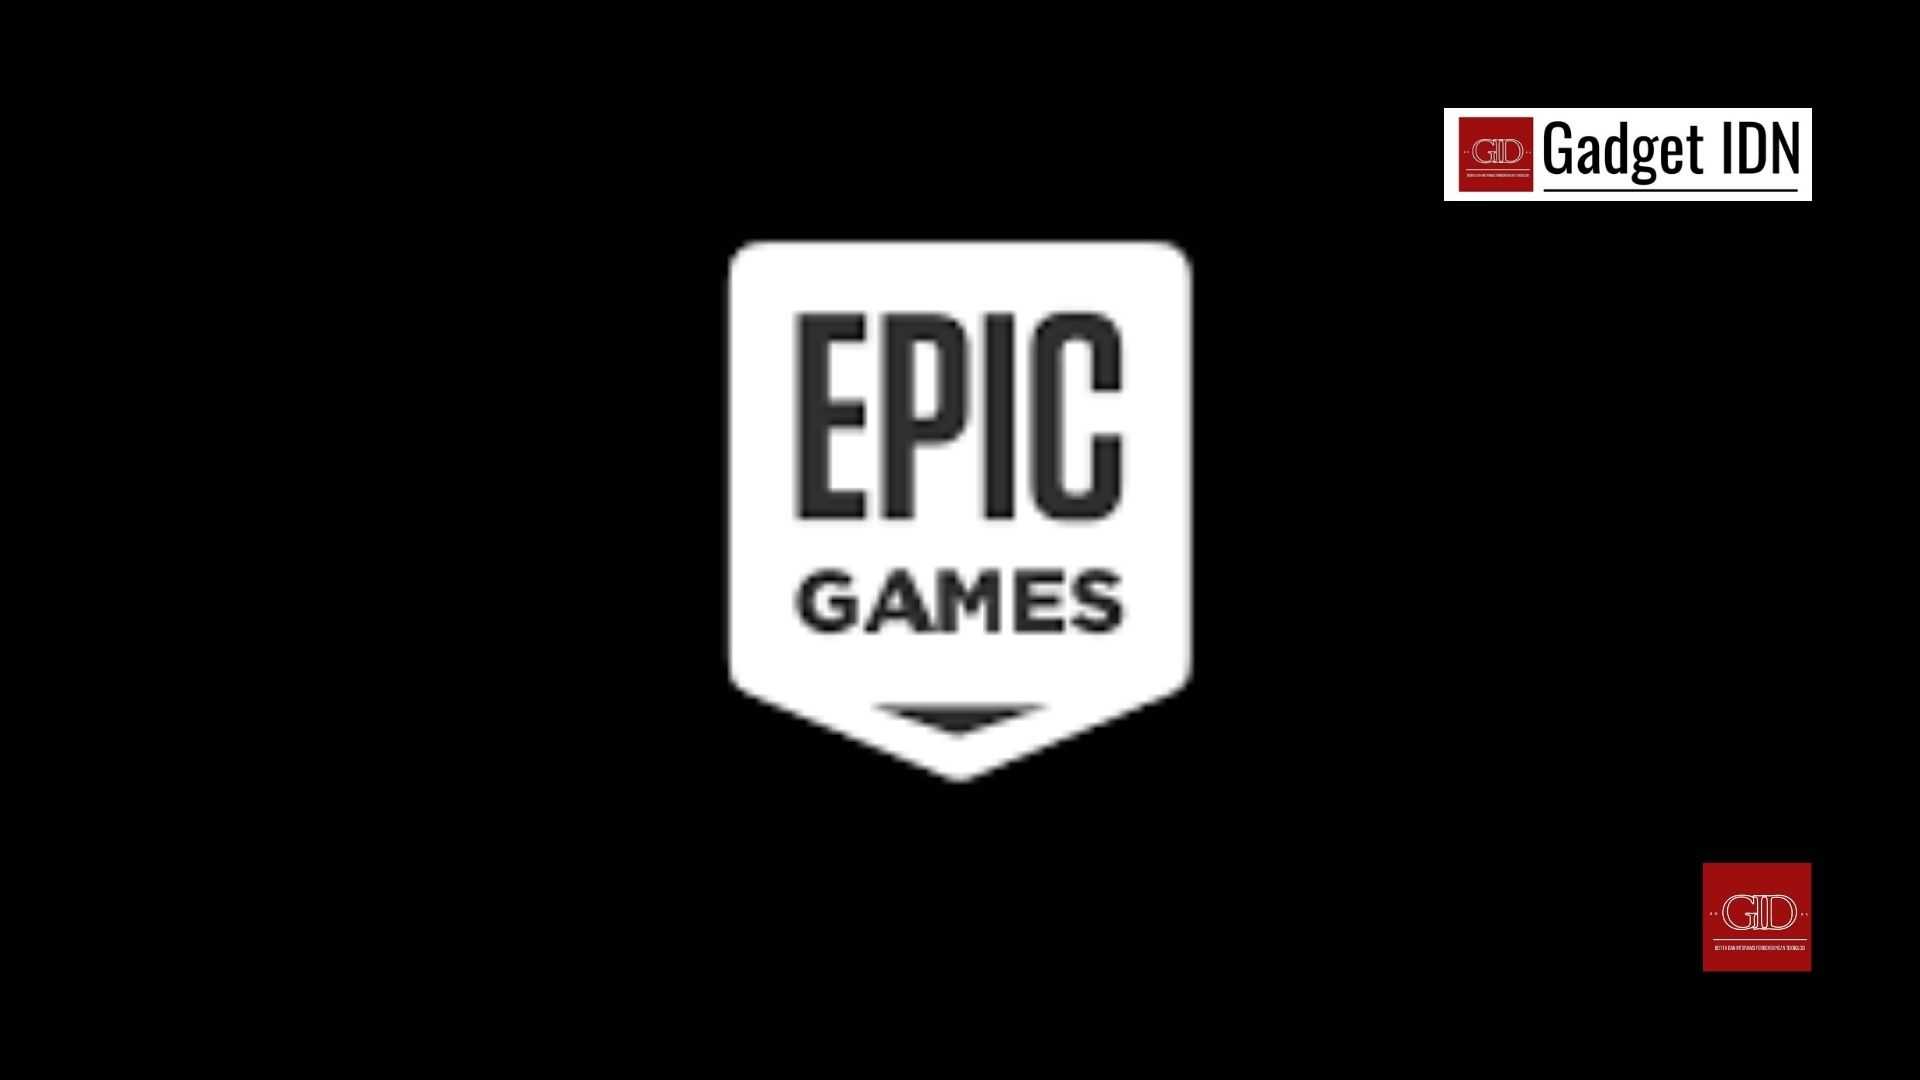 Epic Games Bagi 750 Juta Game Gratis